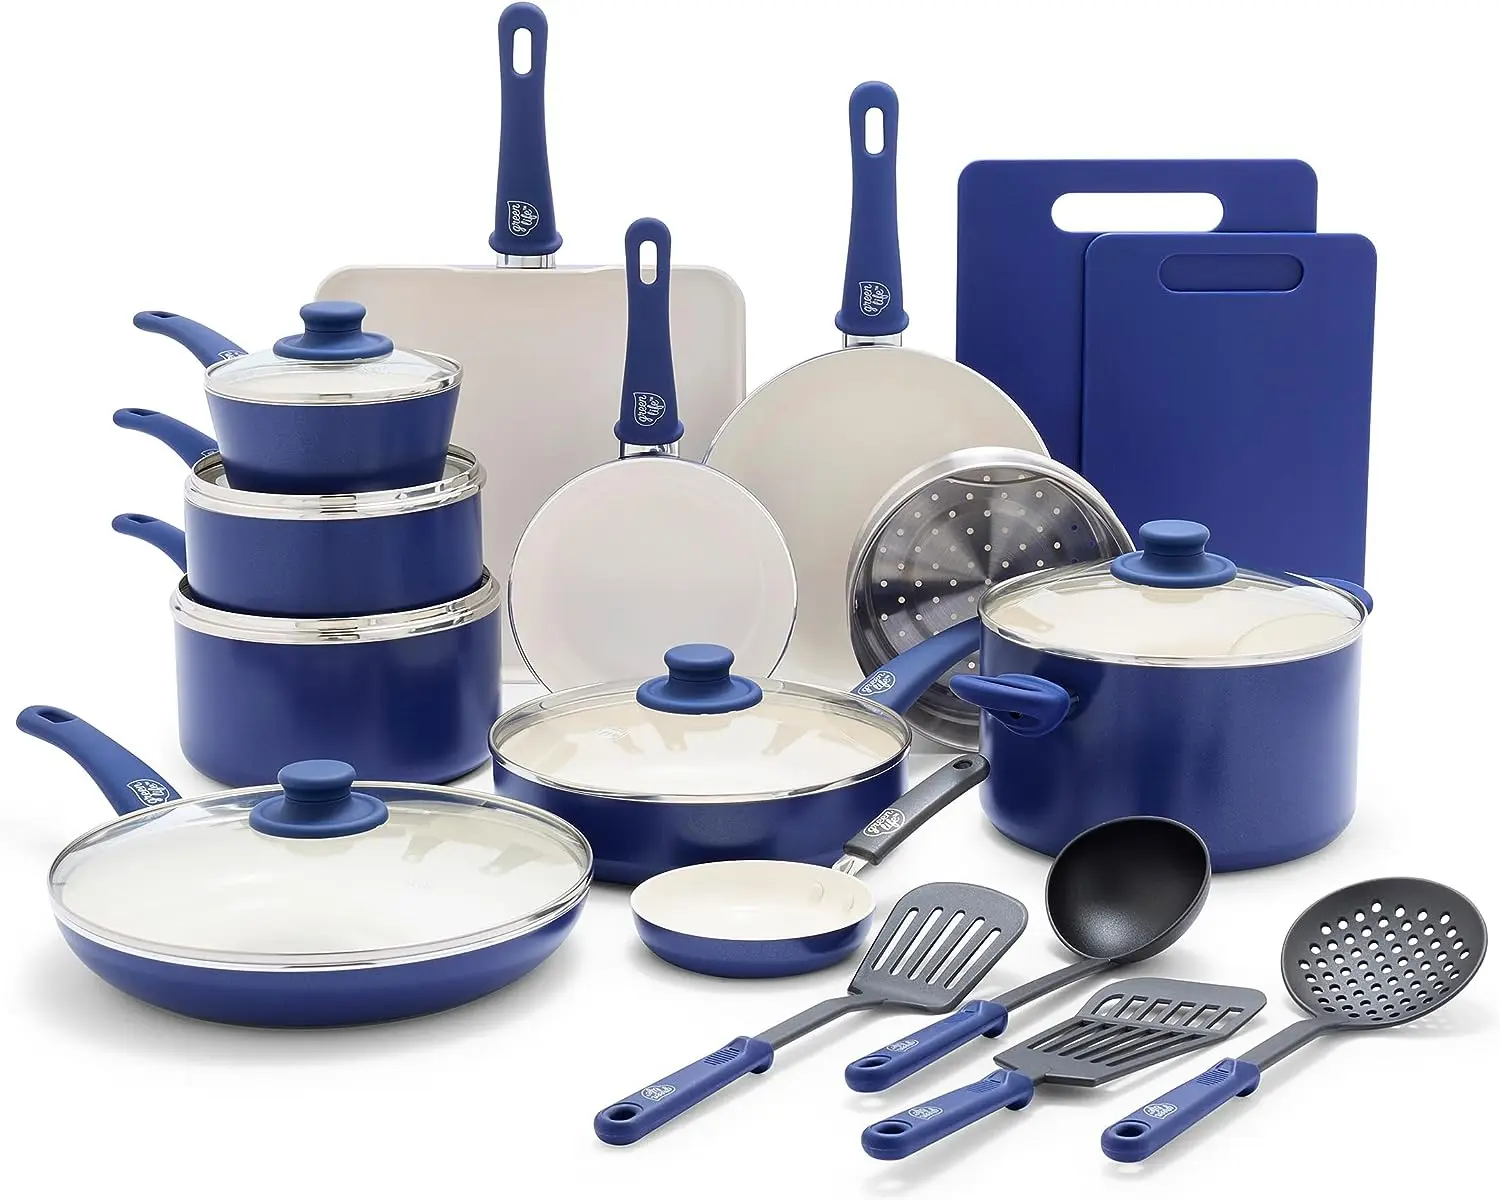 https://ae01.alicdn.com/kf/Sad5265f2c37e46c79f75052ecbece4f24/GreenLife-Soft-Grip-Healthy-Ceramic-Nonstick-16-Piece-Kitchen-Cookware-Pots-and-Frying-Sauce-Pans-Set.jpg